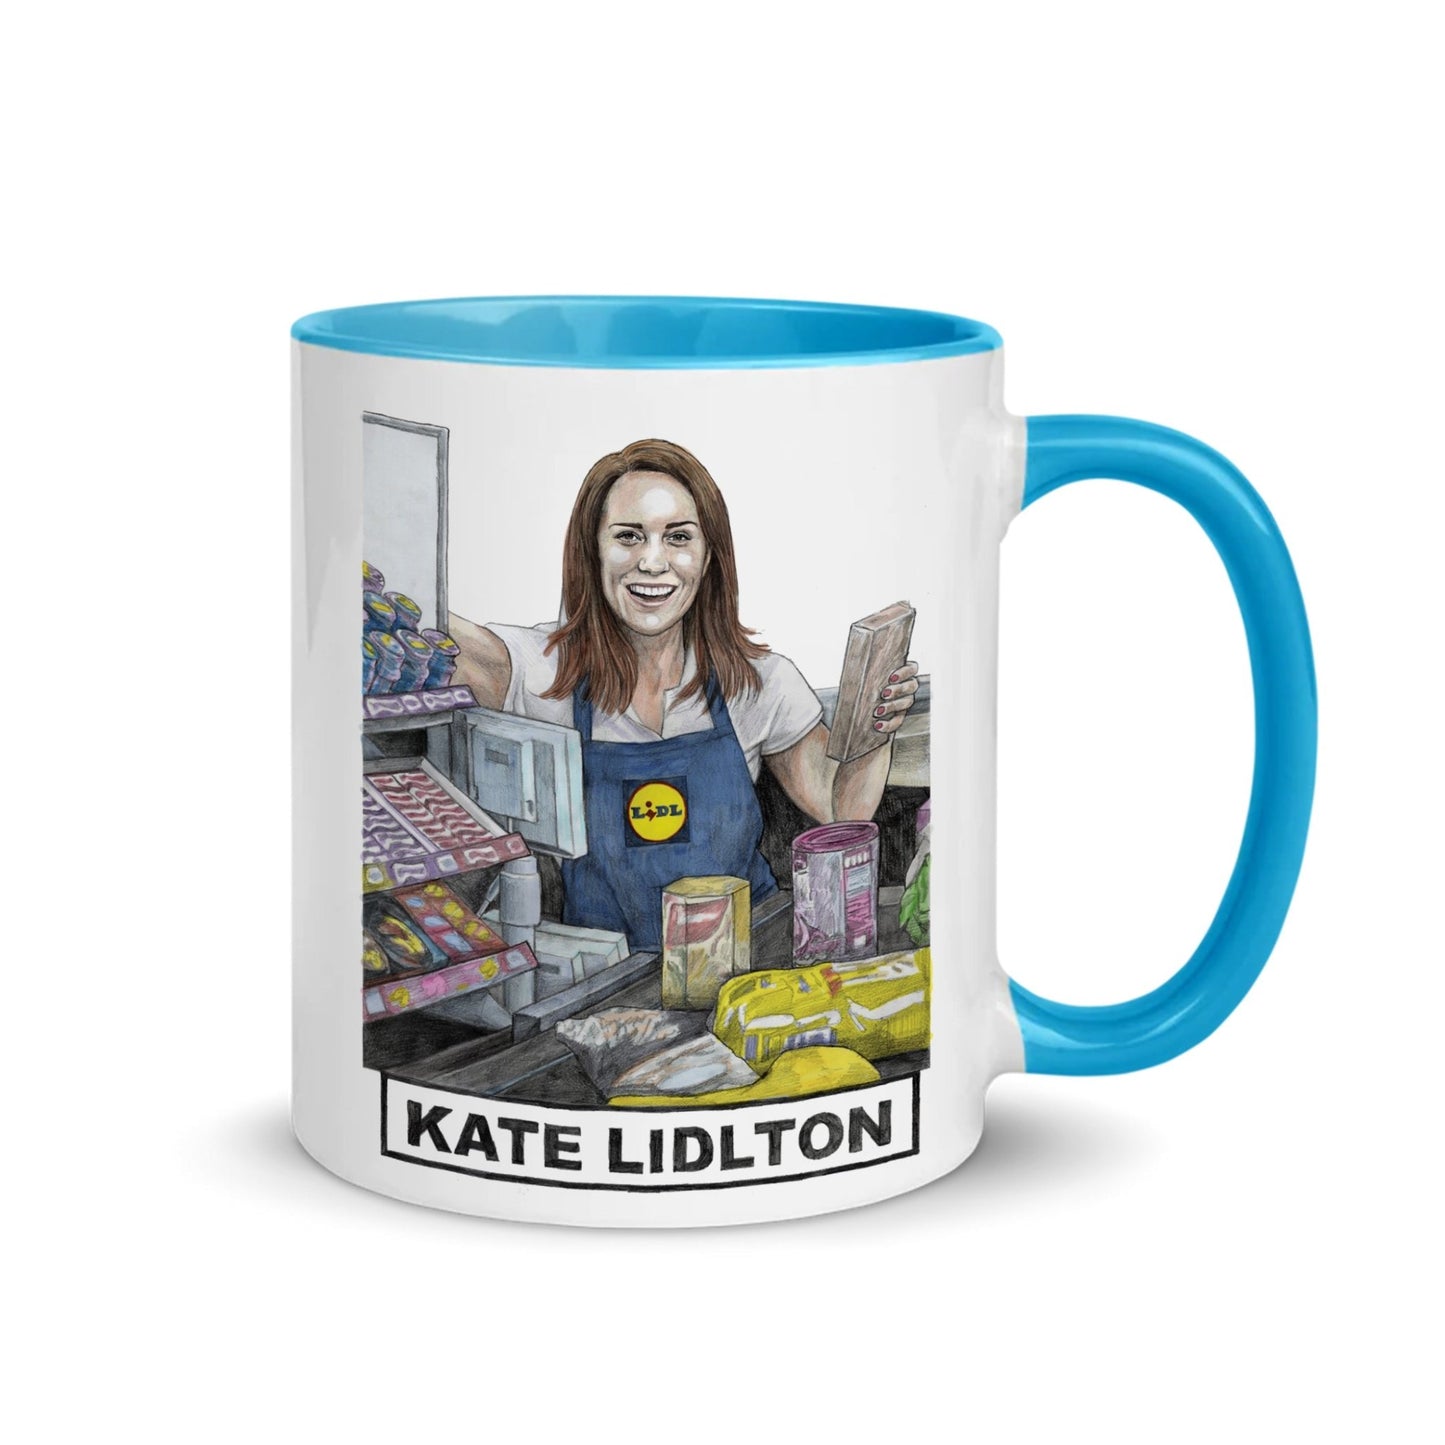 Kate Lidlton Ceramic Mug - Quite Good Cards Funny Birthday Card